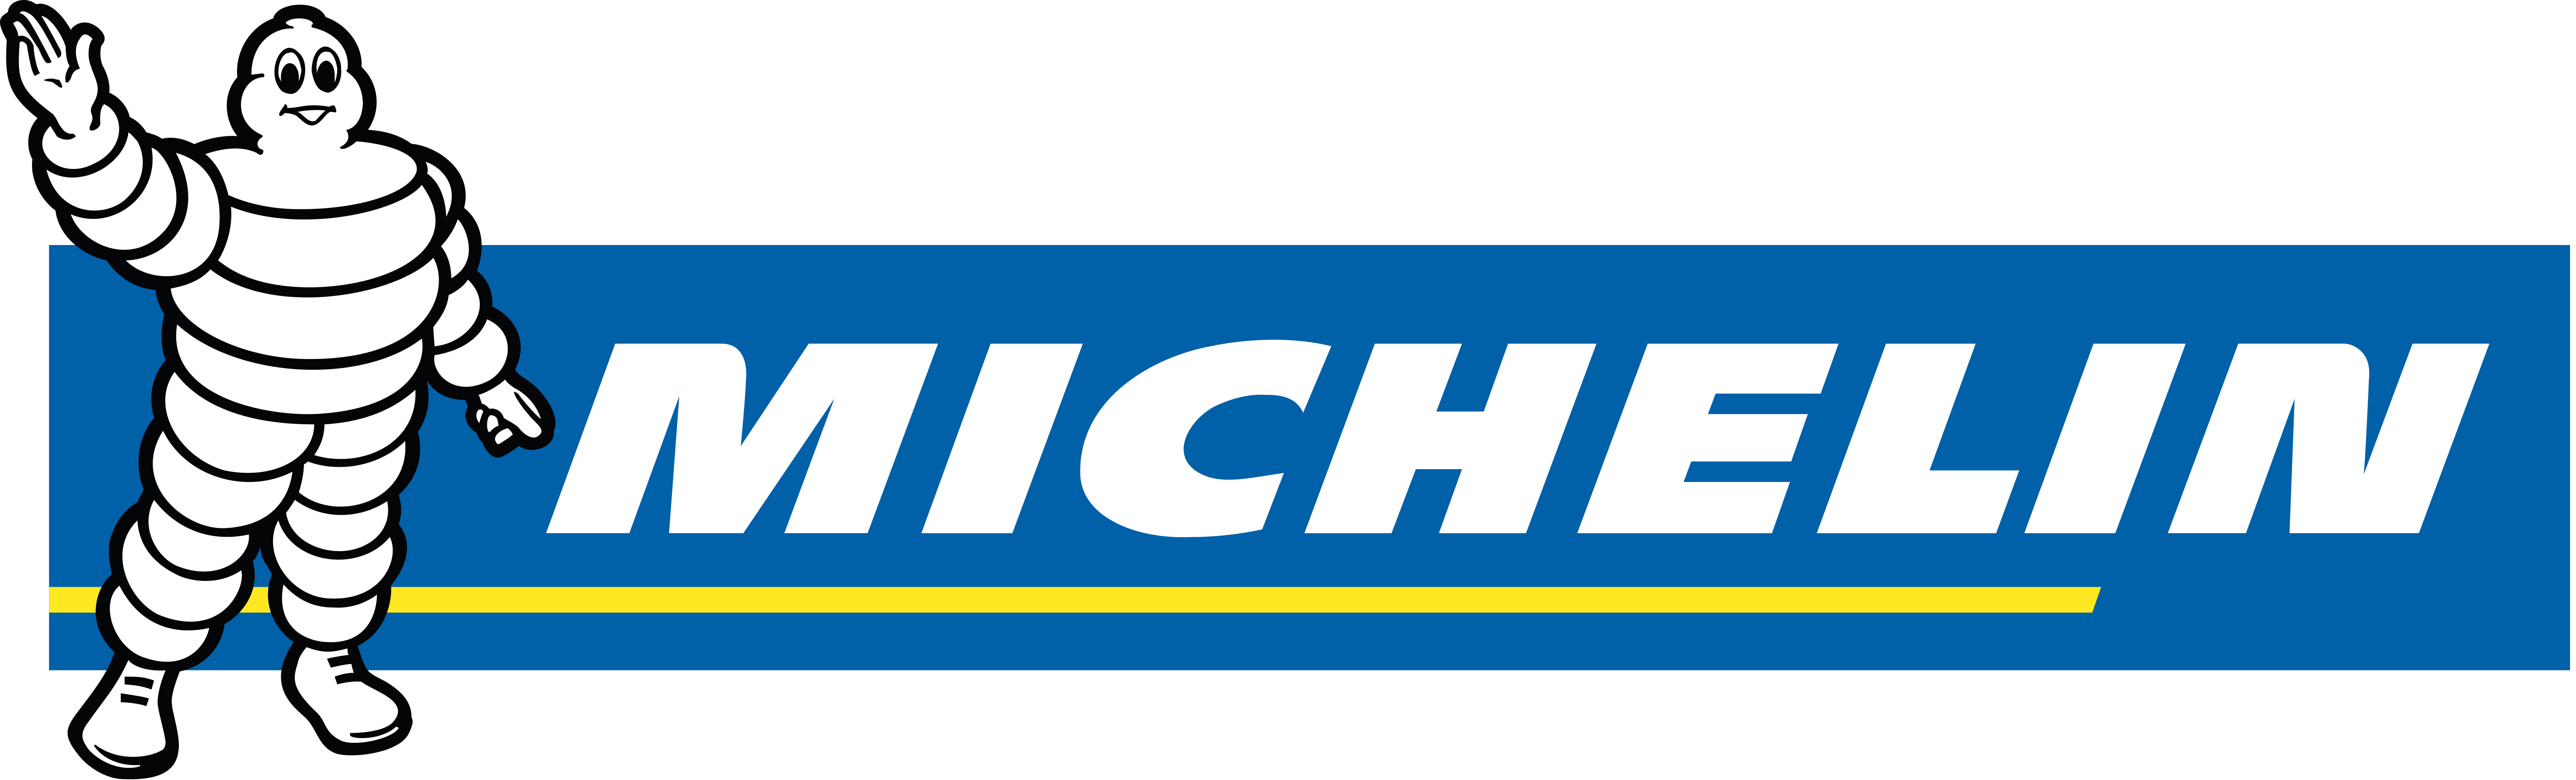 Michelin-logo